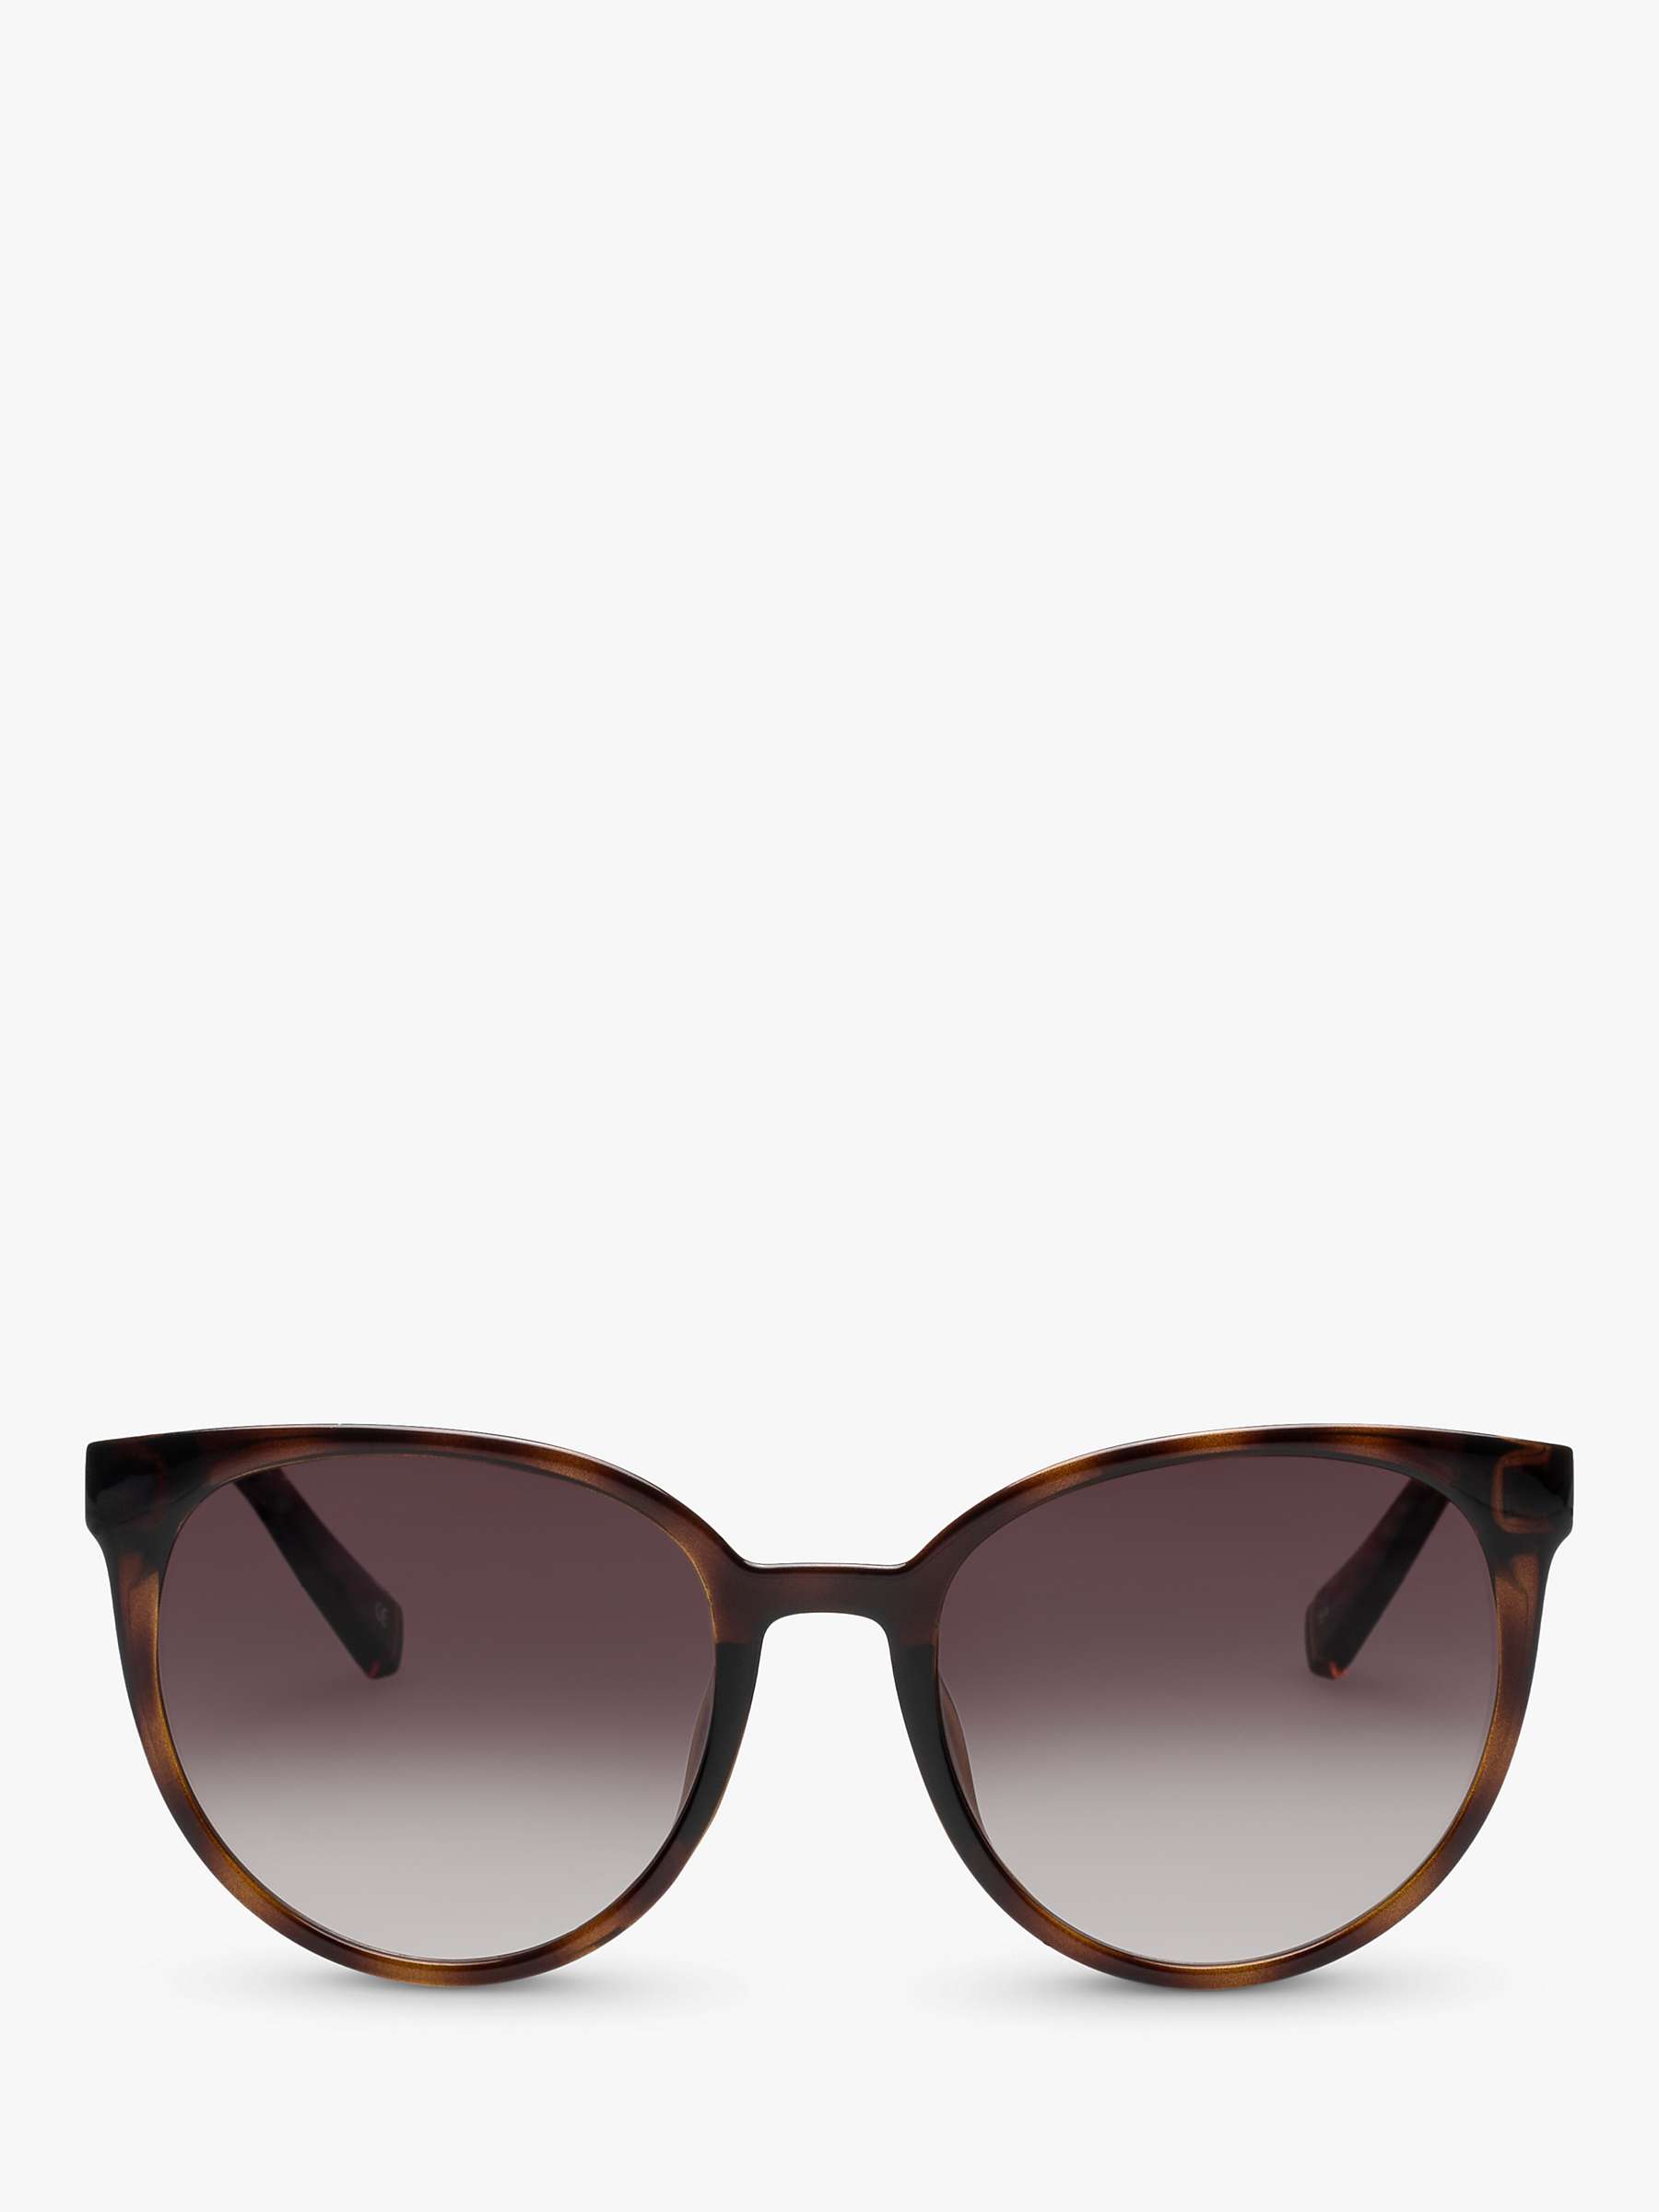 Buy Le Specs L5000145 Women's Armada Round Sunglasses Online at johnlewis.com